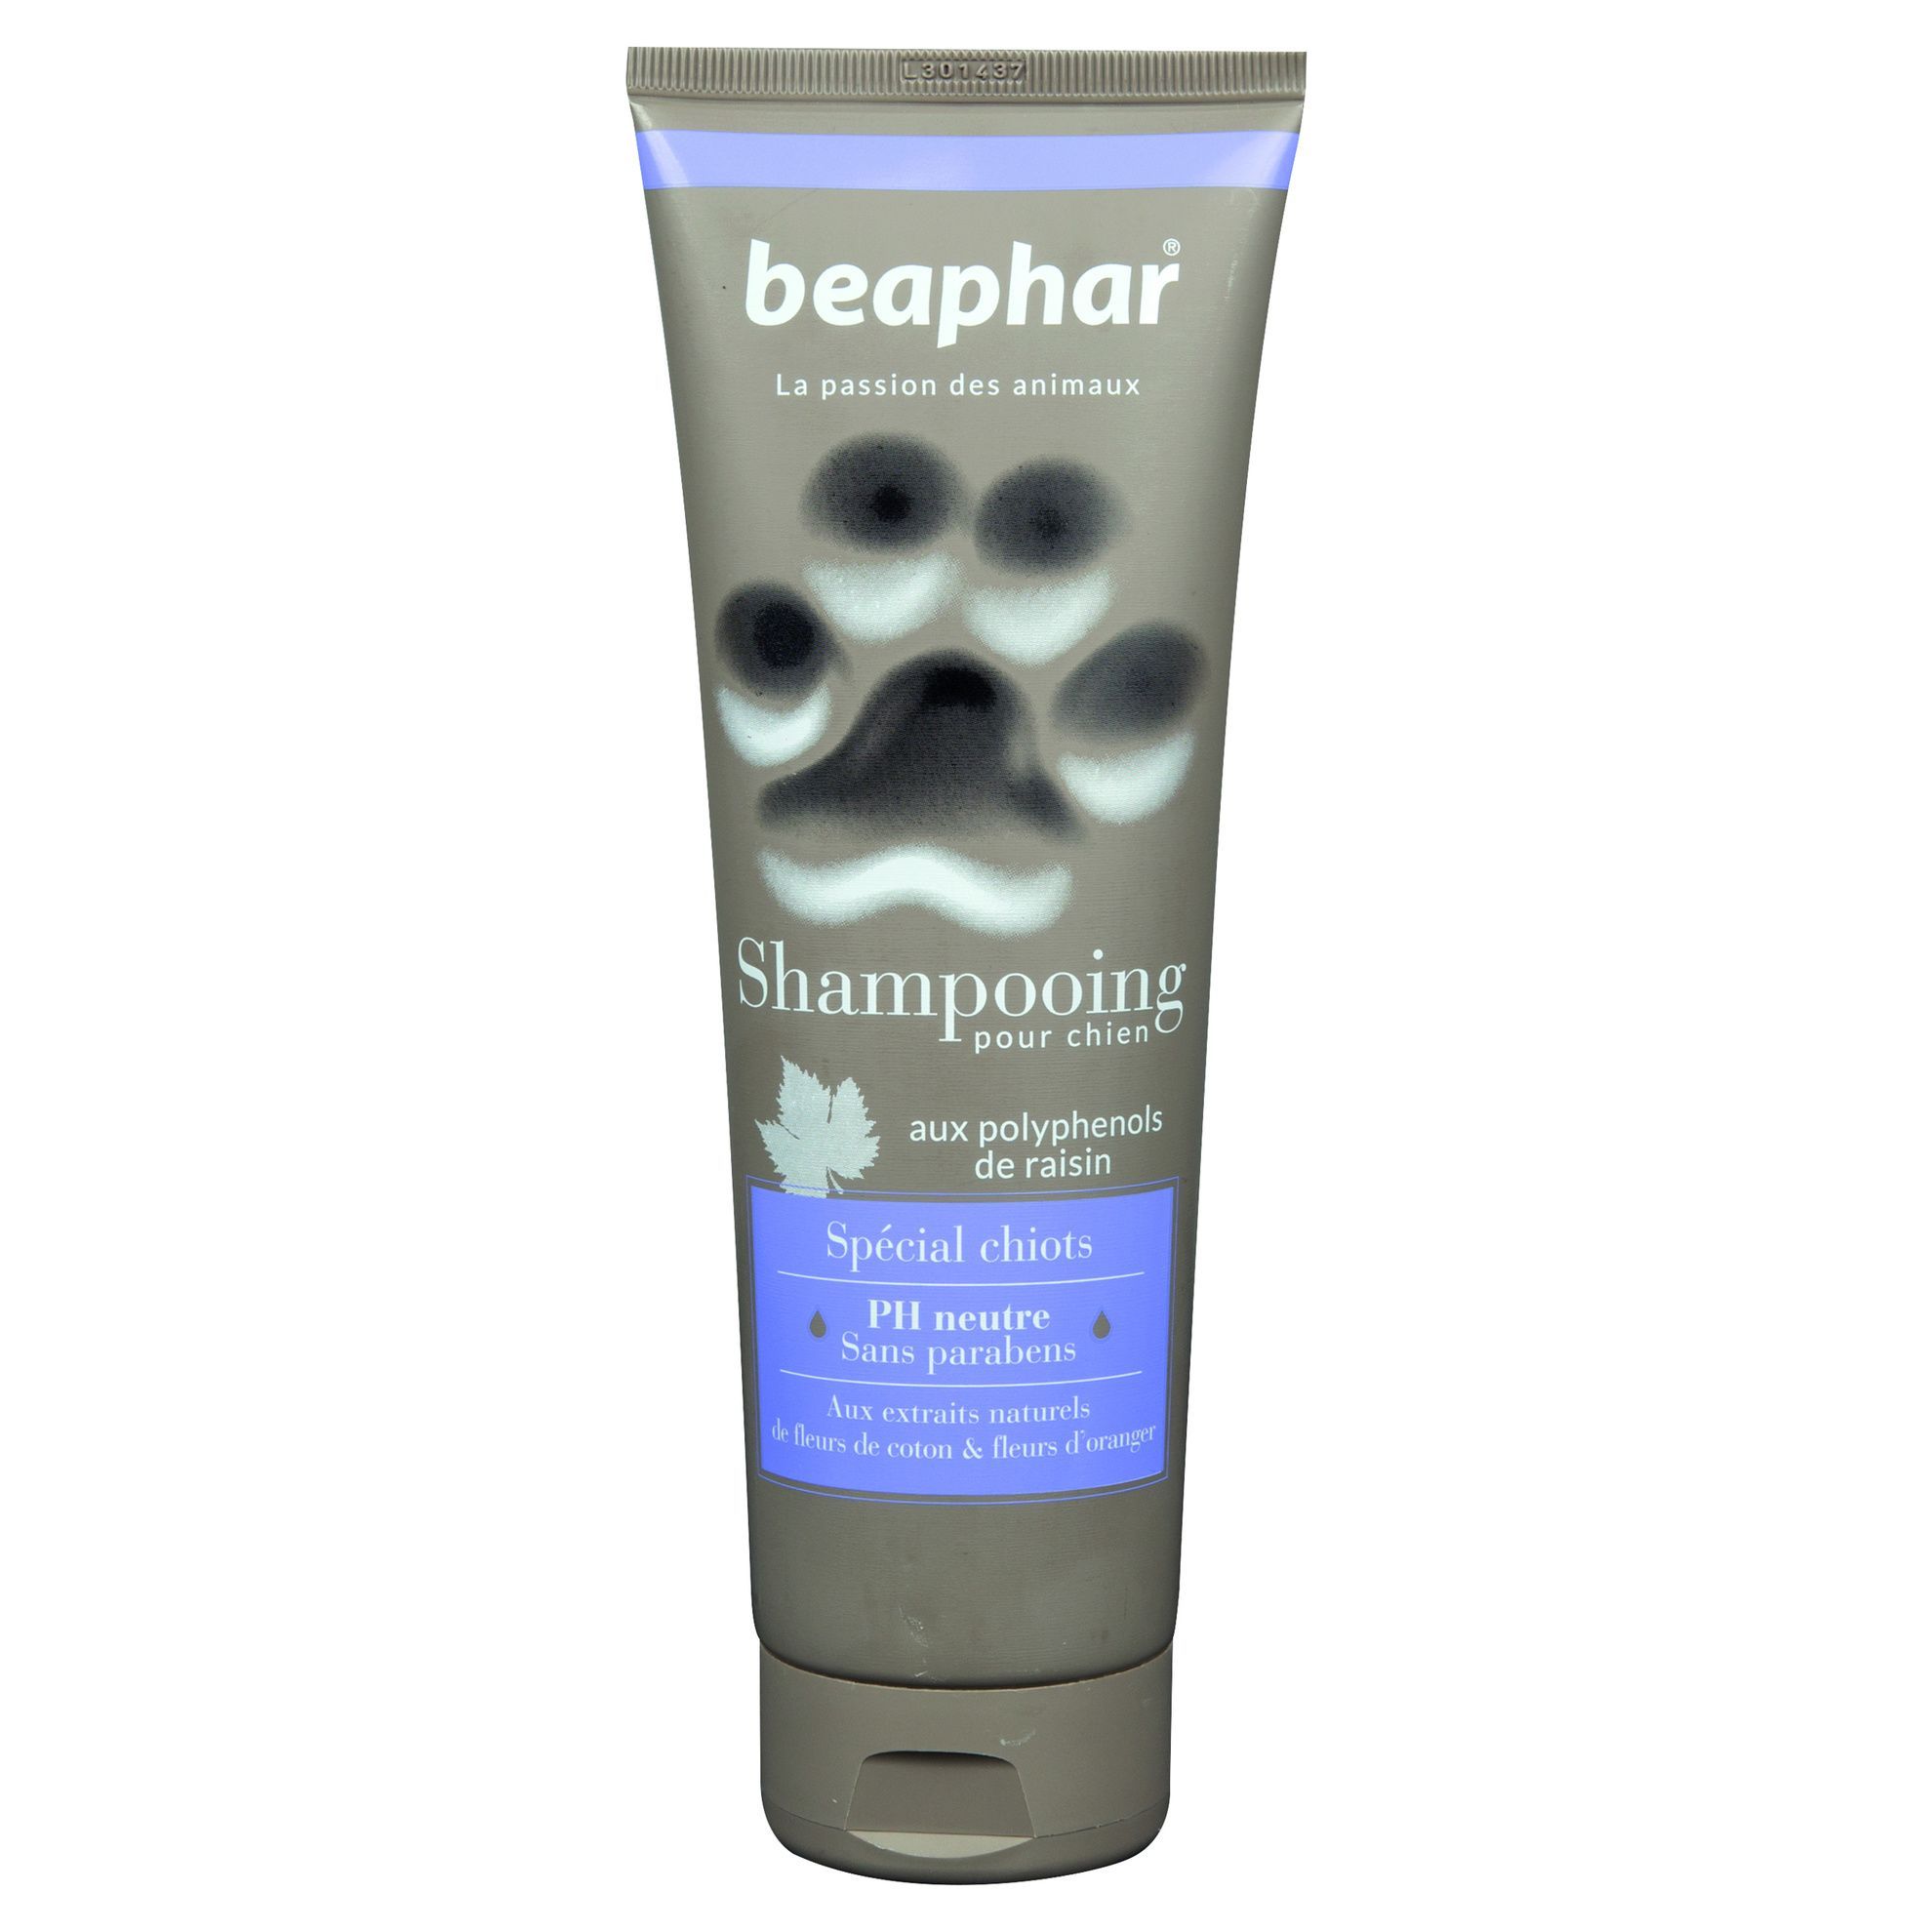 shampoo-extra-mild-for-puppy-beaphart-pet shop-pas-chere-trend-fashion-cosmetics